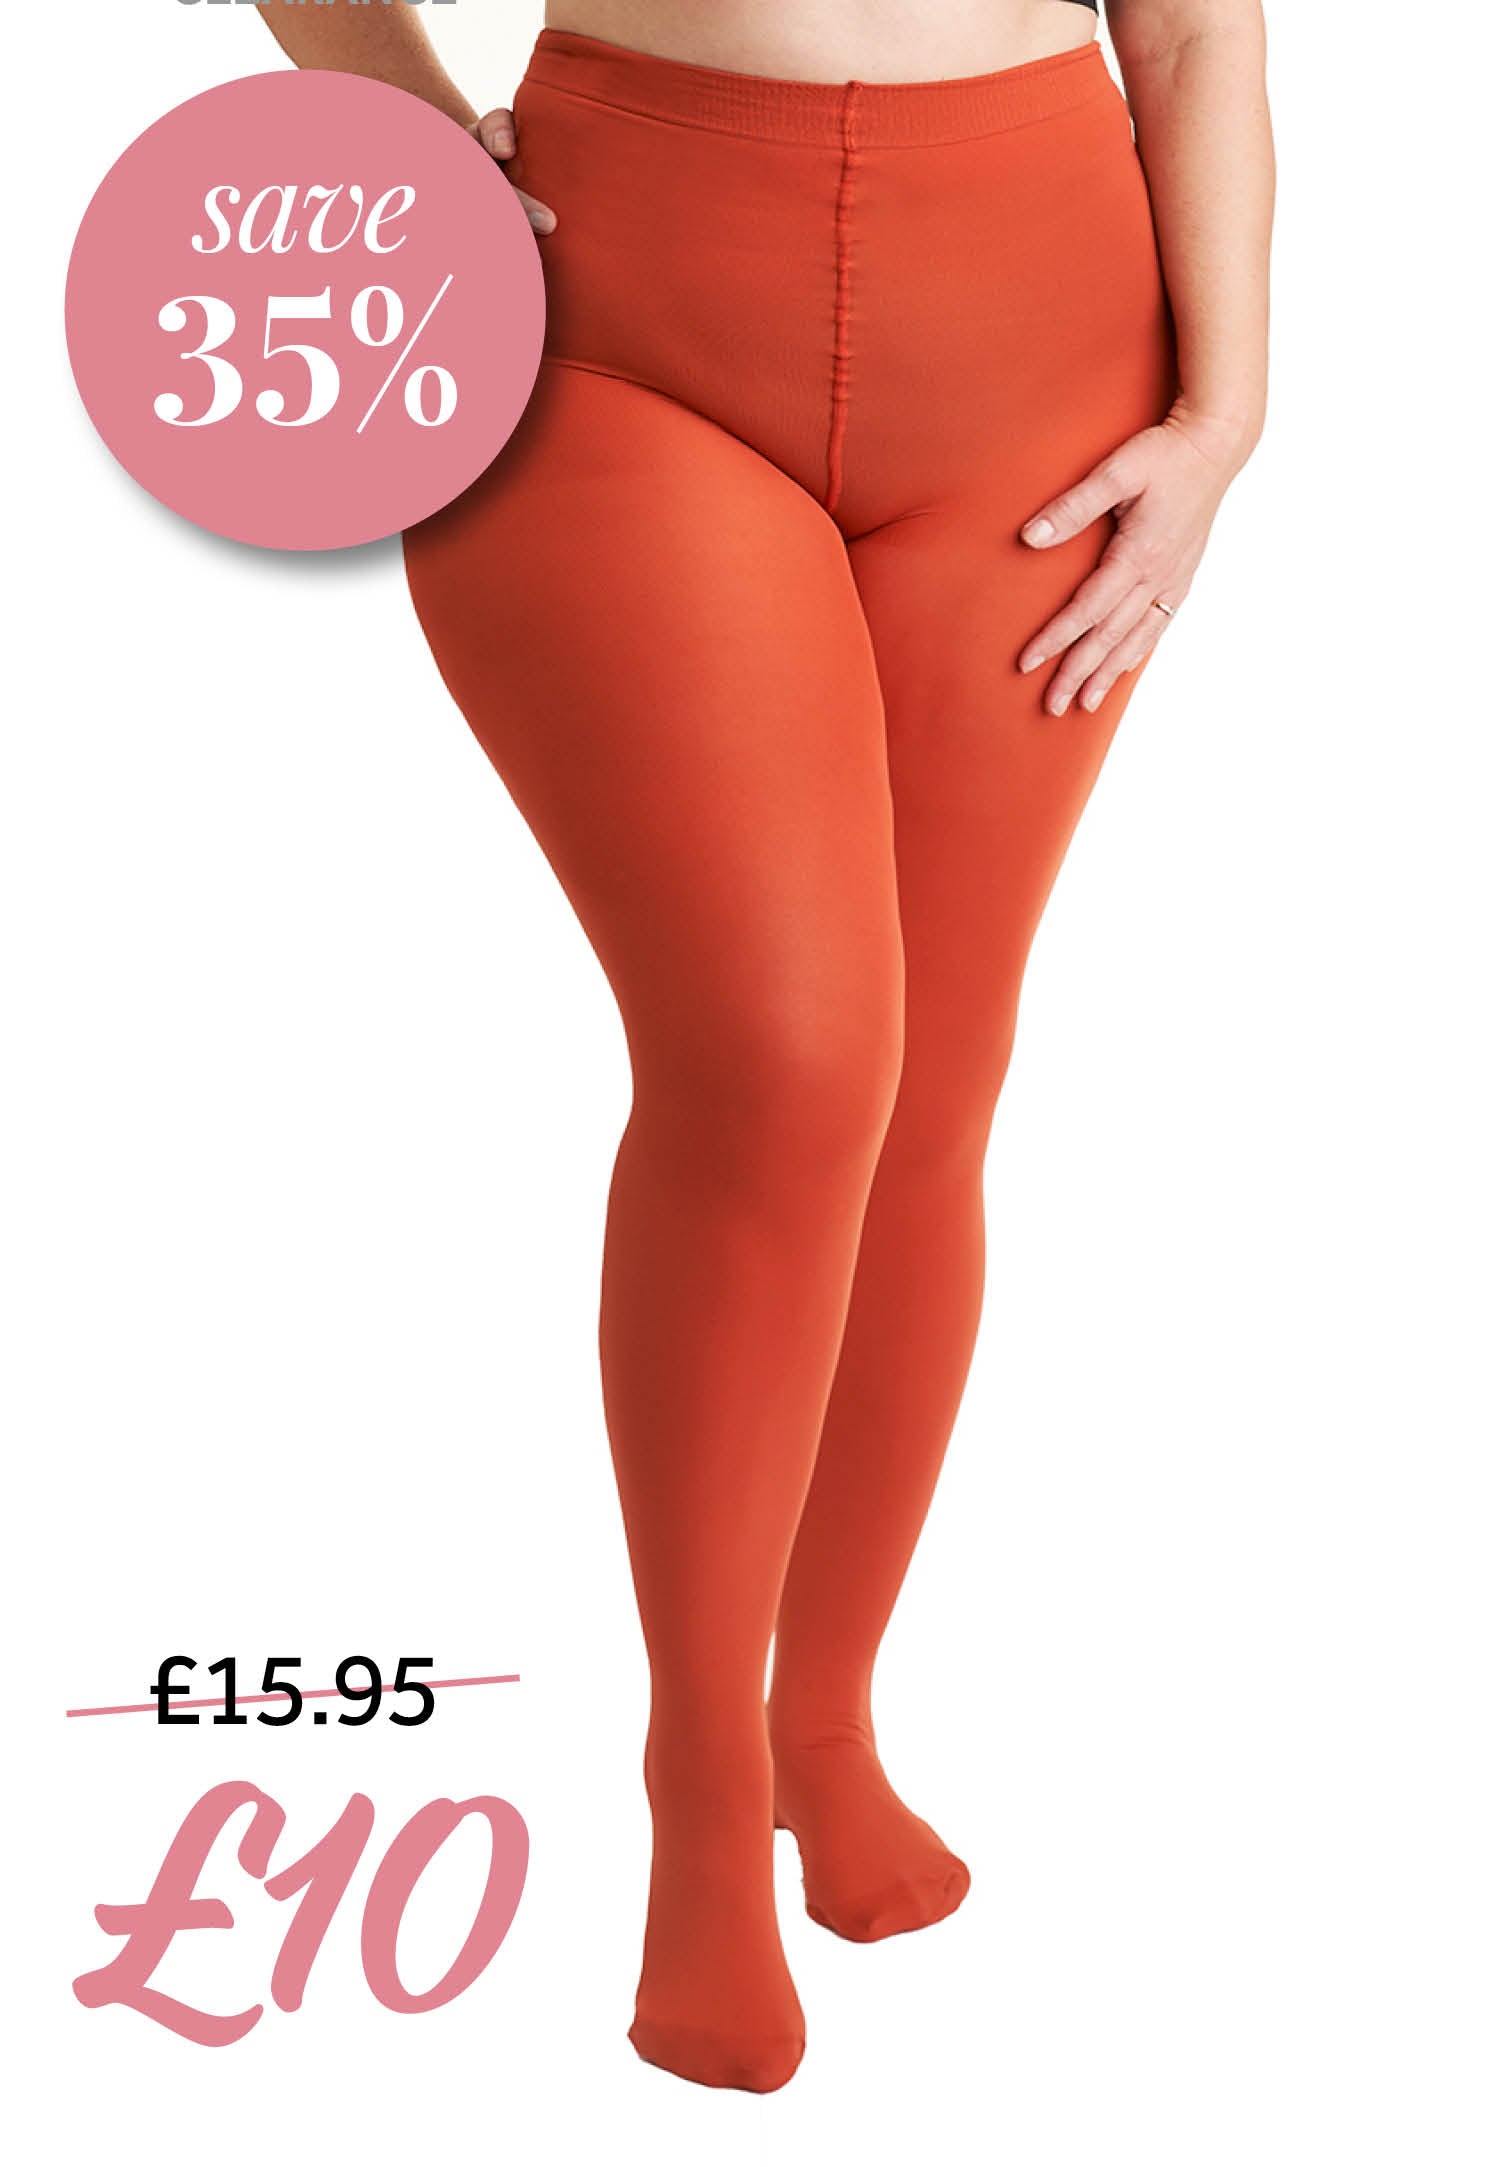 All Woman 90 denier tights - Burnt Orange - CLEARANCE